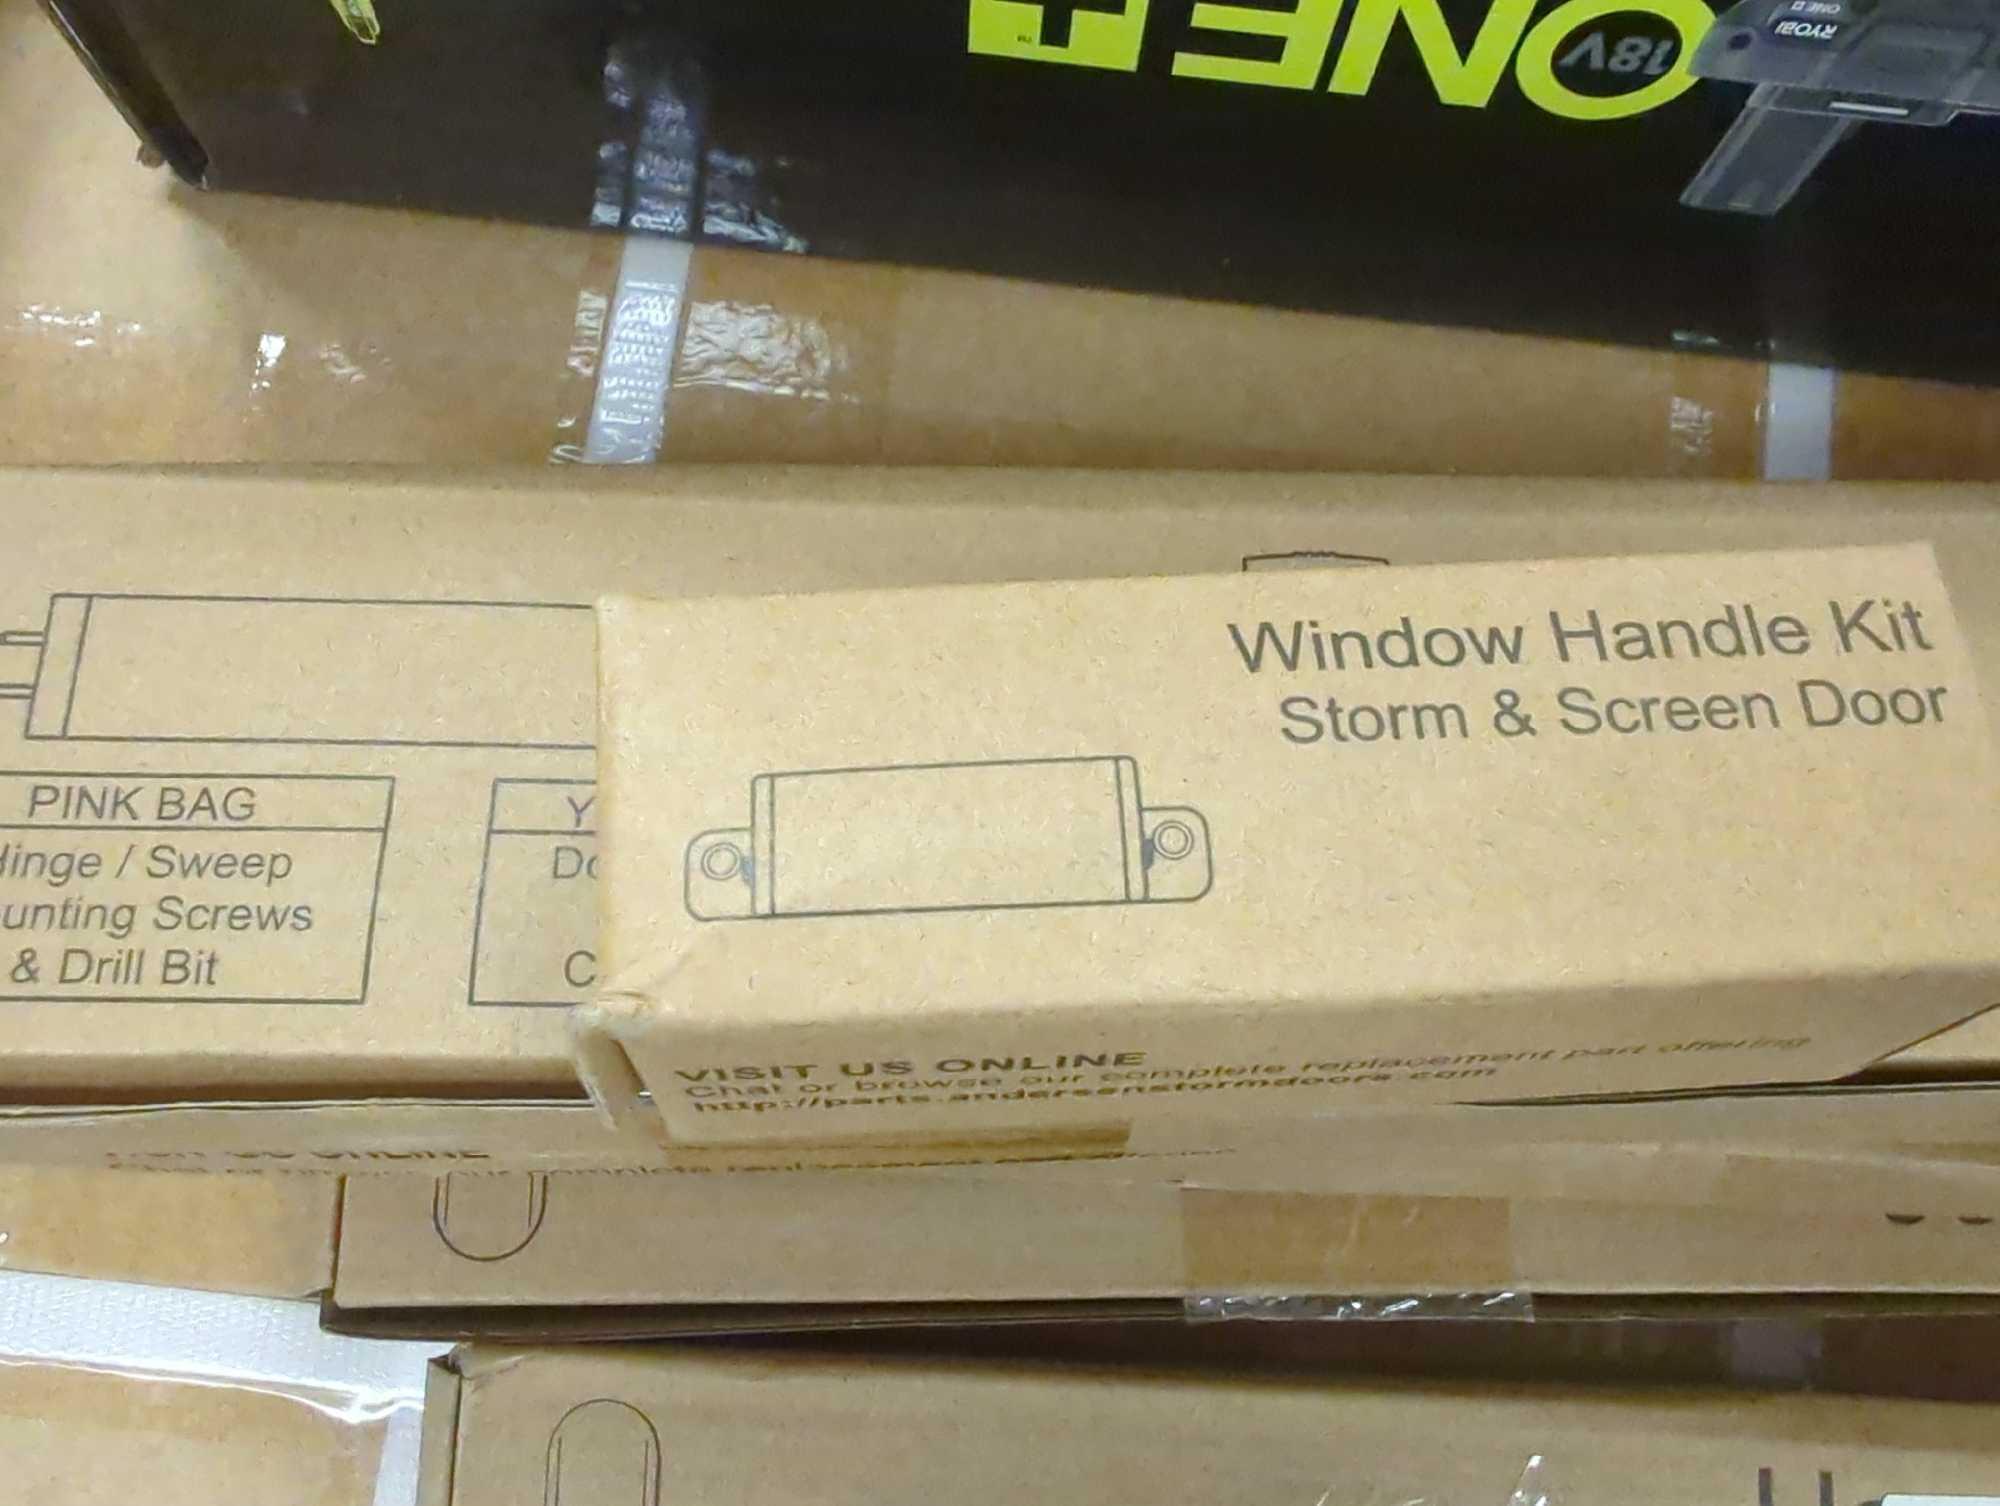 Lot of Anderson Door Accessories to include, Anderson Storm and Screen Door Handle, Closing and